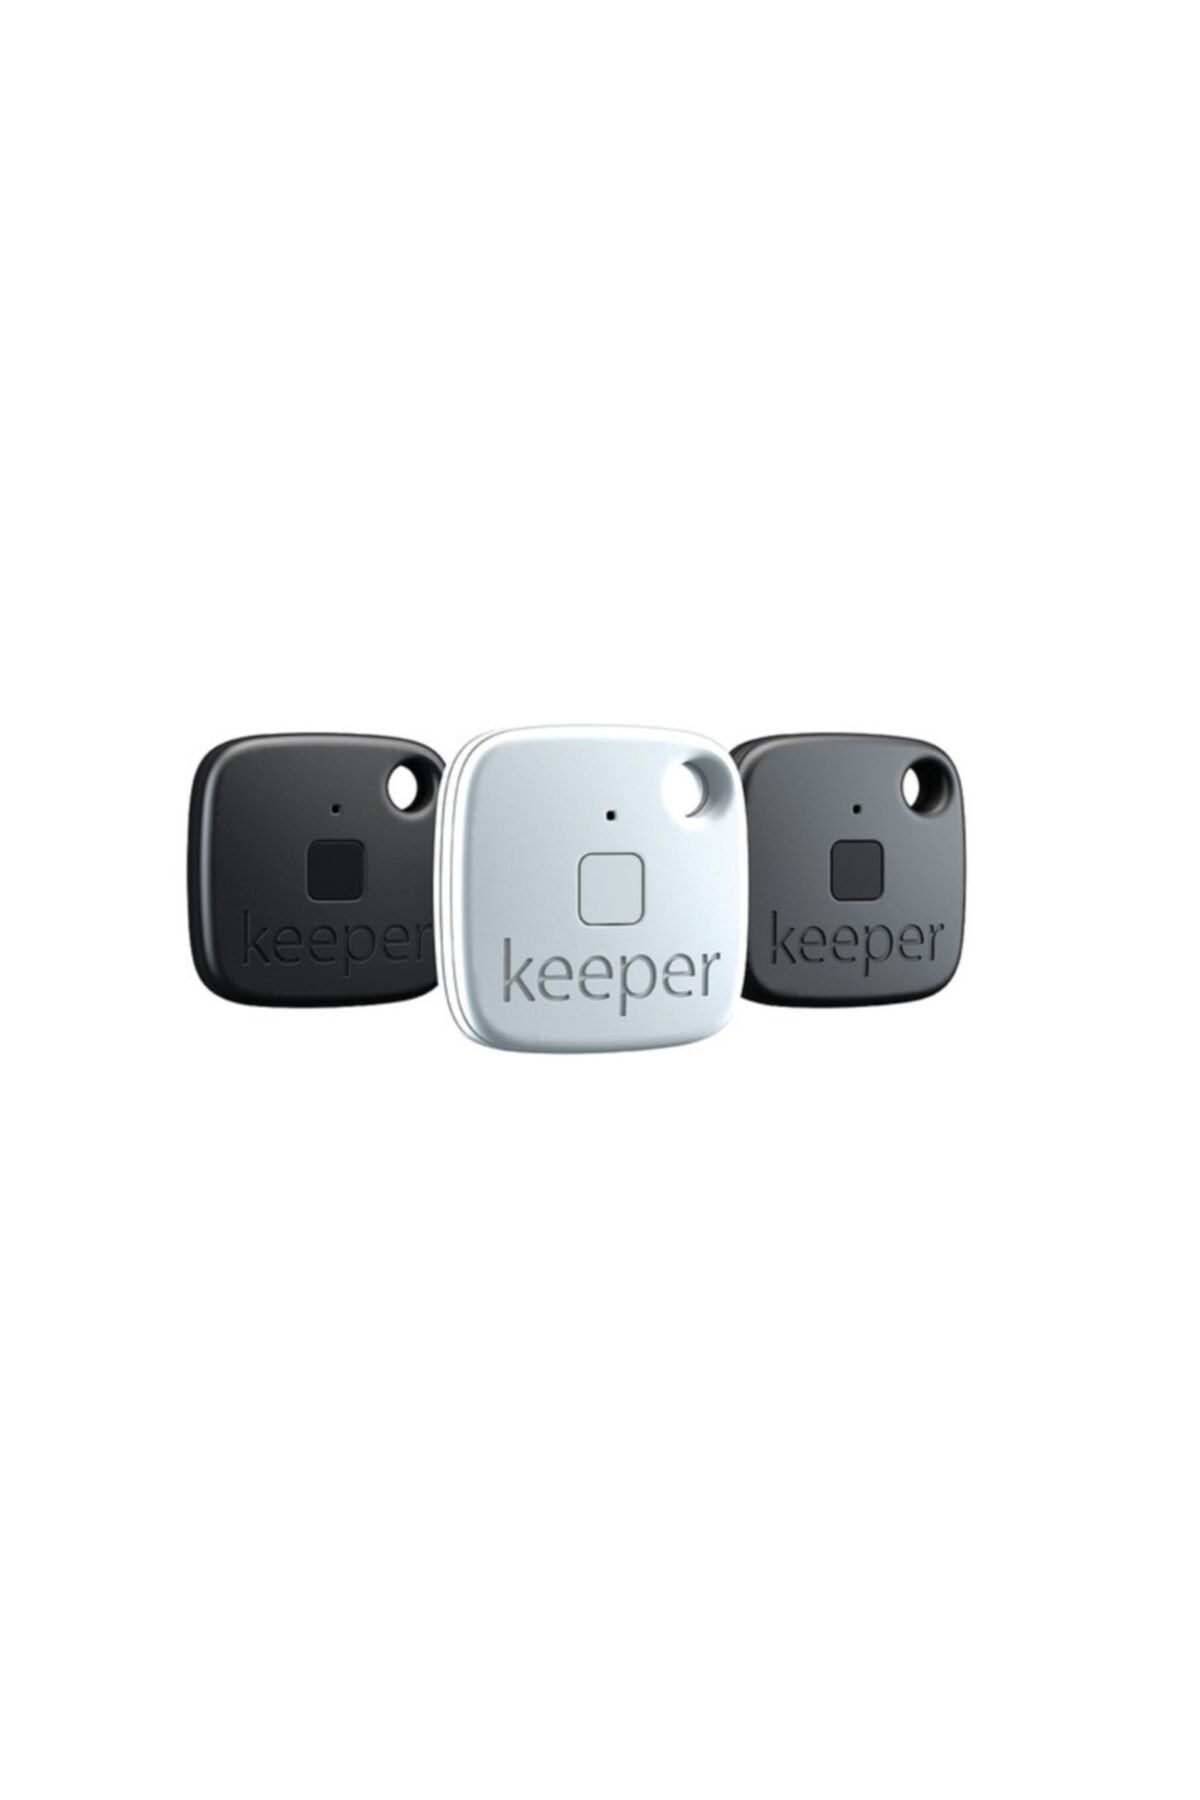 Gigaset Keeper Led Işıklı Bluetooth 4.0 Akıllı Takip (3'lü Set)